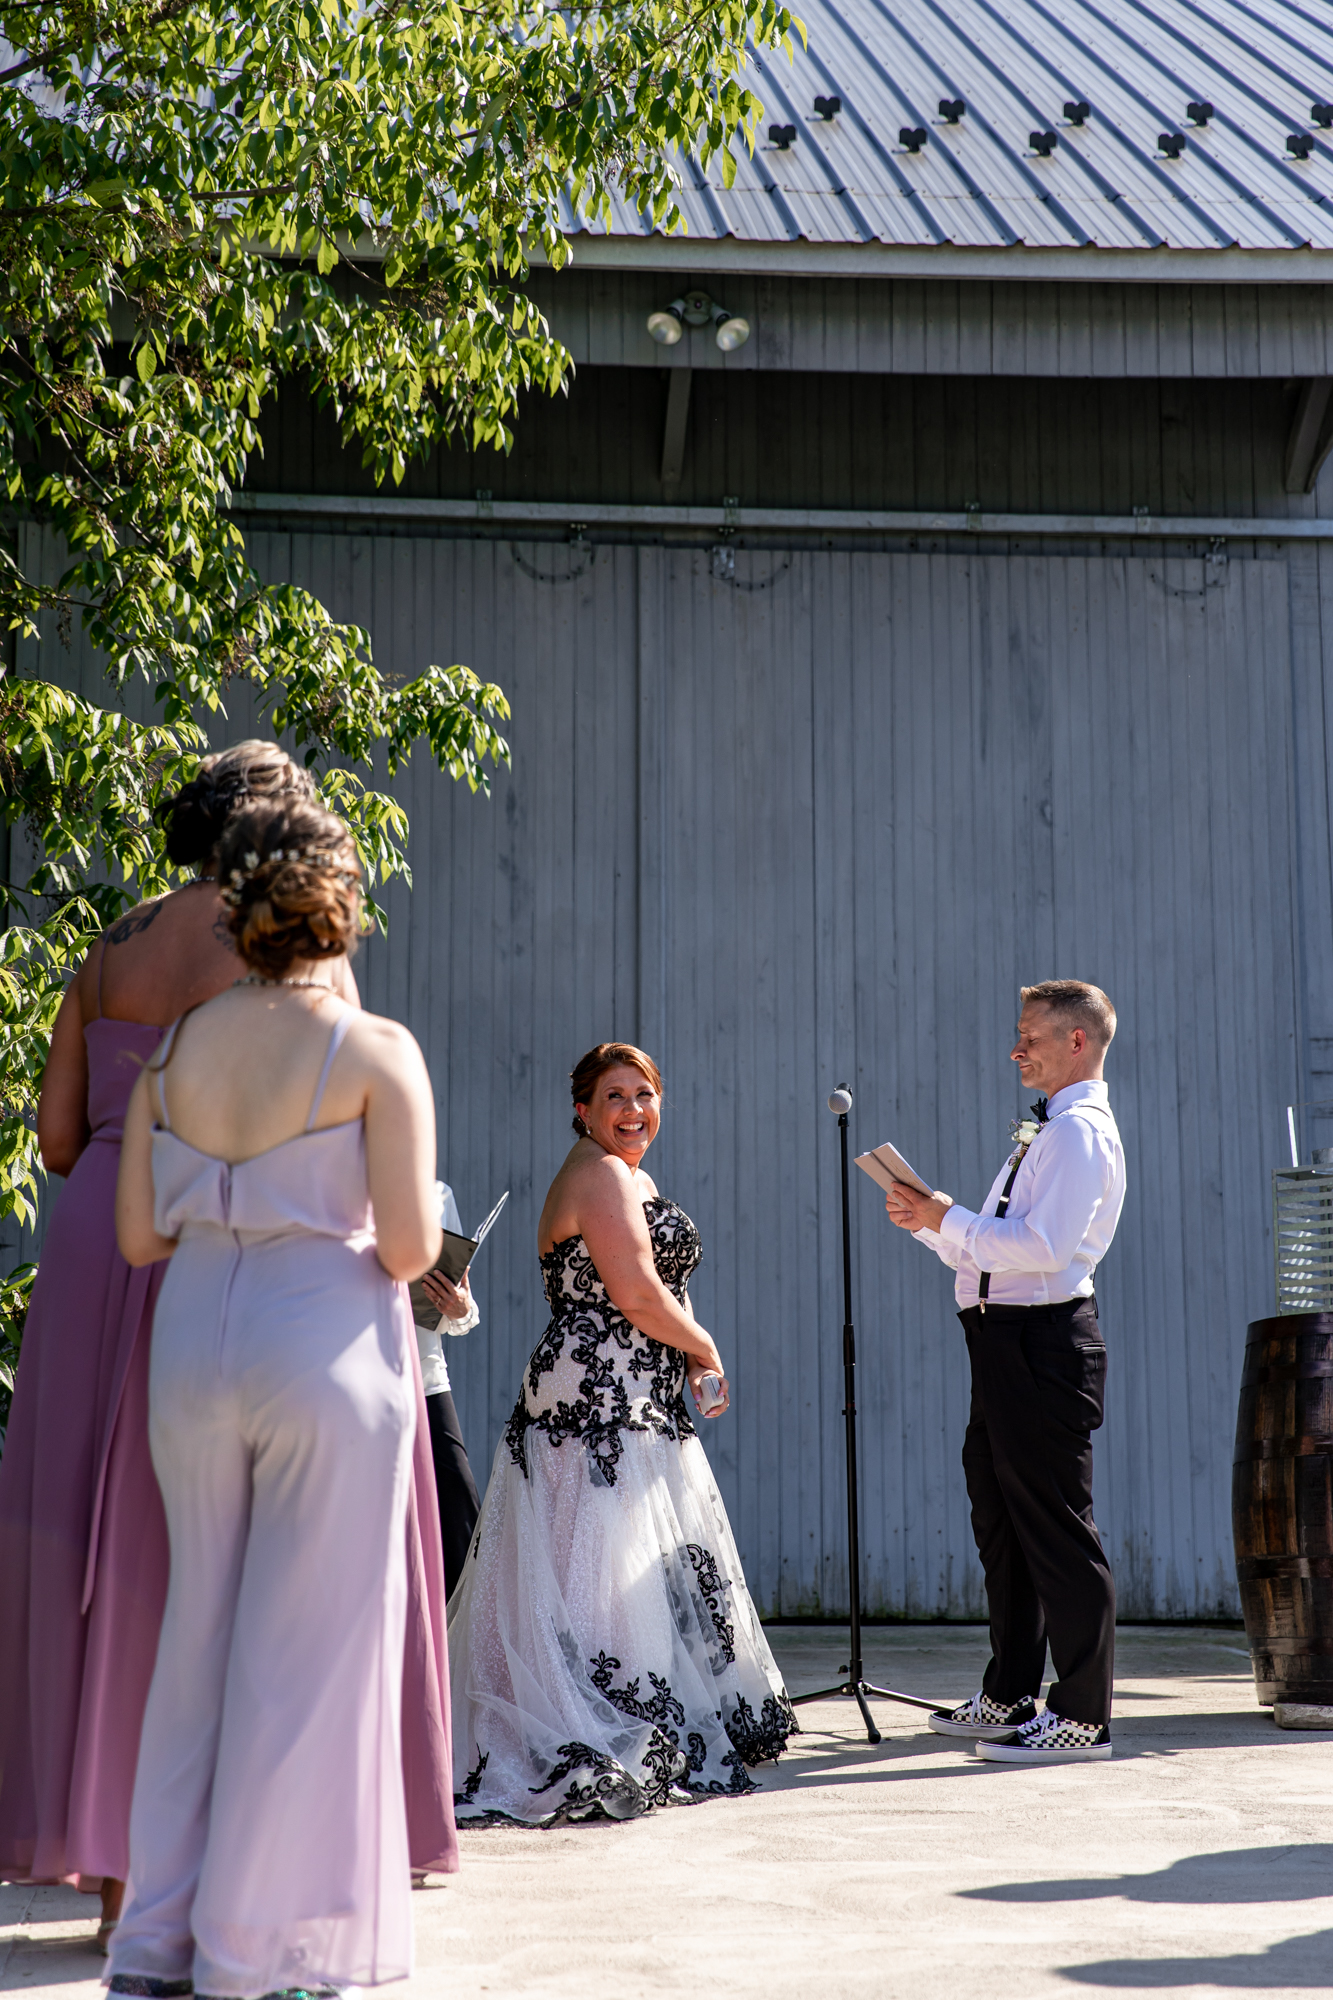 outdoor barn wedding ceremony at filbert bed & breakfast